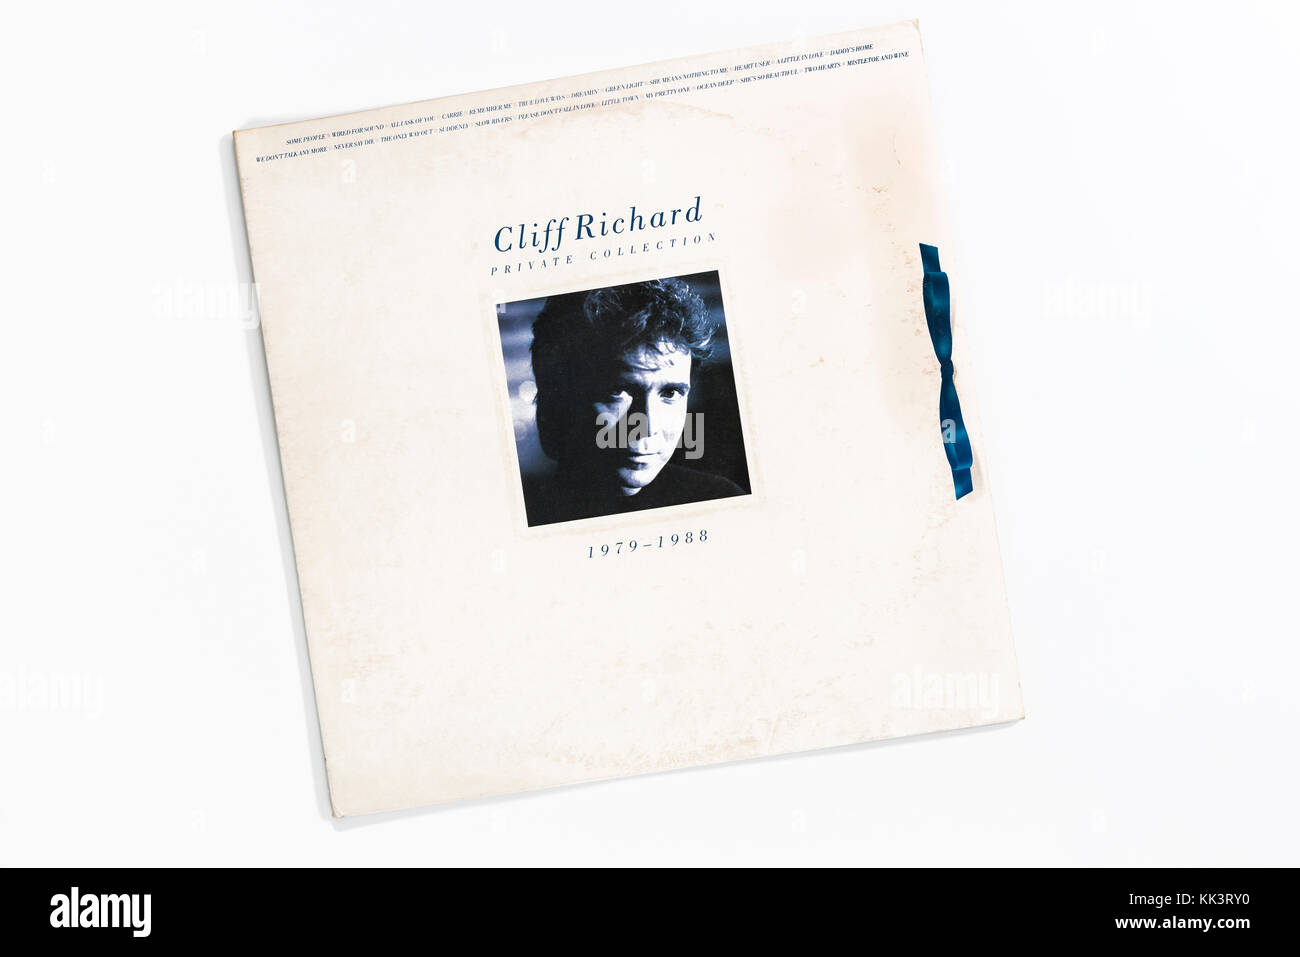 Cliff Richard, Private Collection, Album cover, 1988. Stock Photo